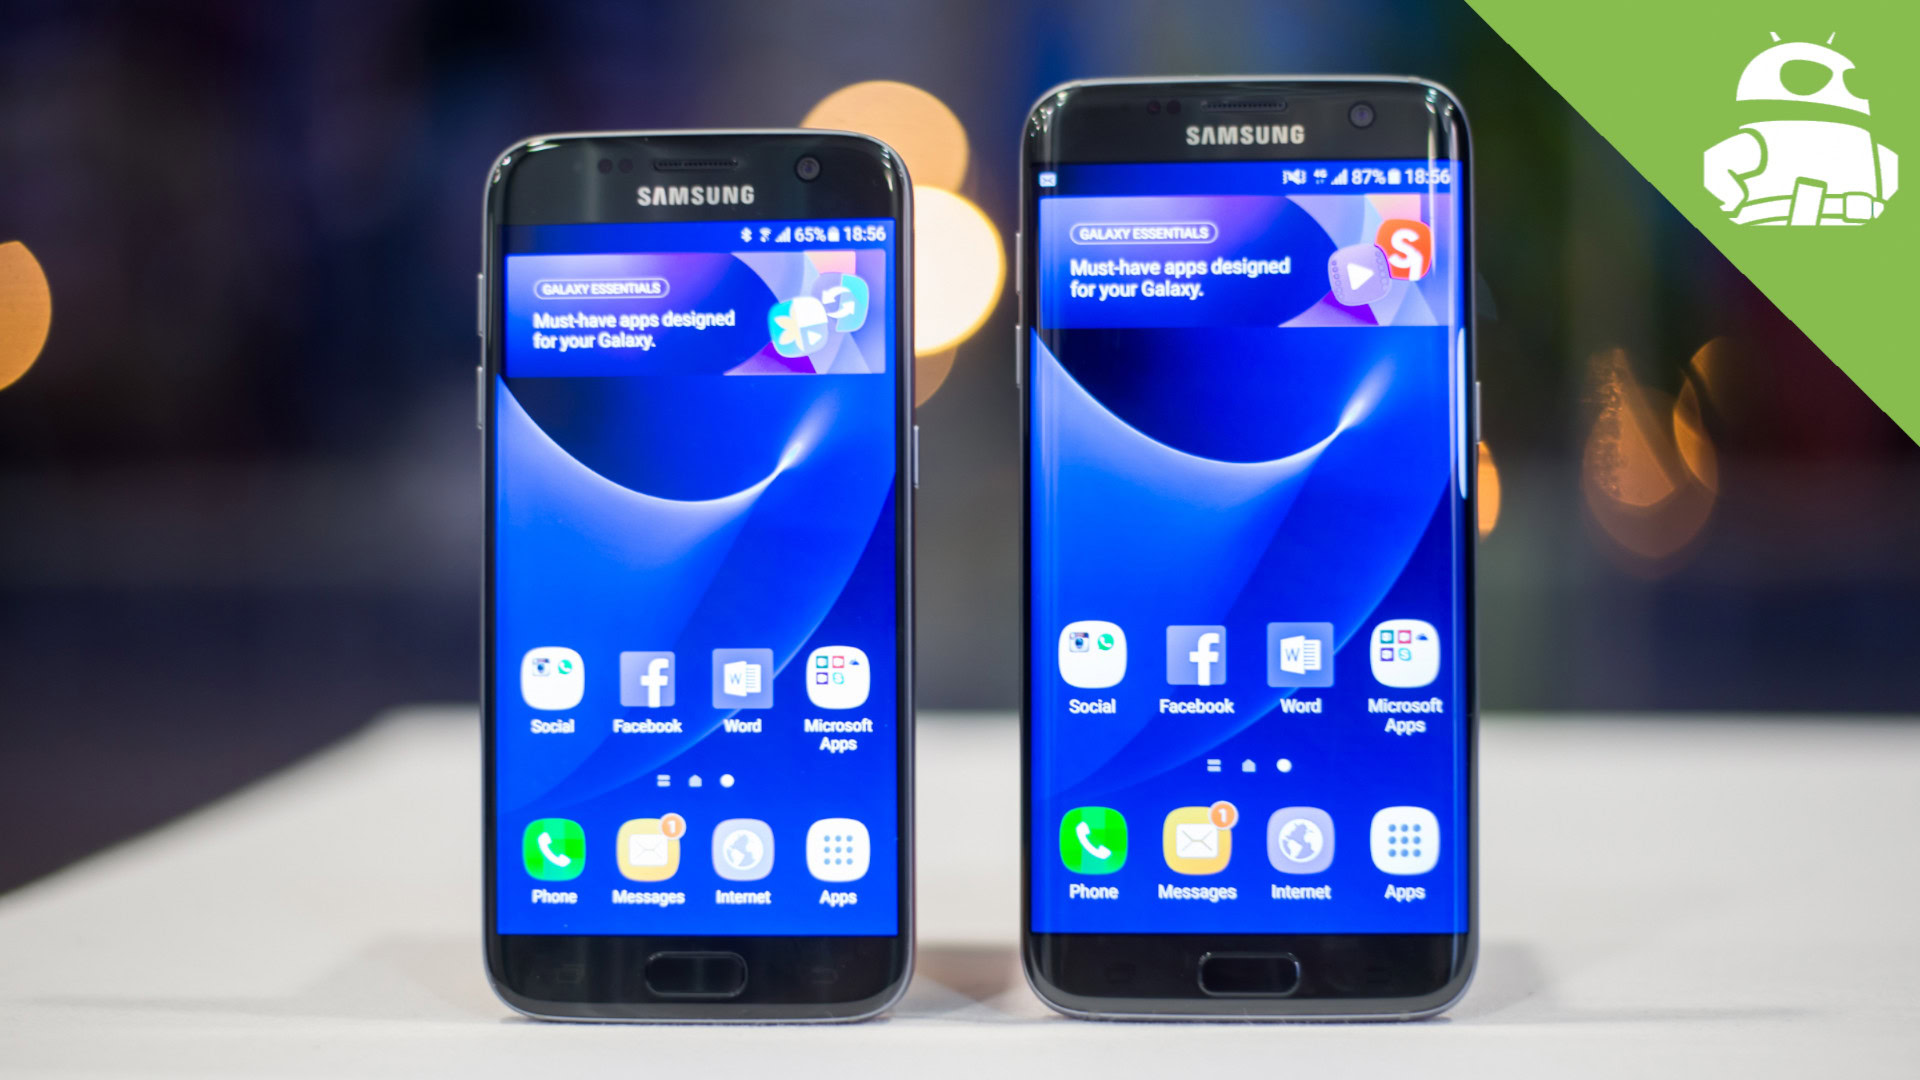 Samsung Galaxy vs Galaxy S7 Edge hands comparison Authority